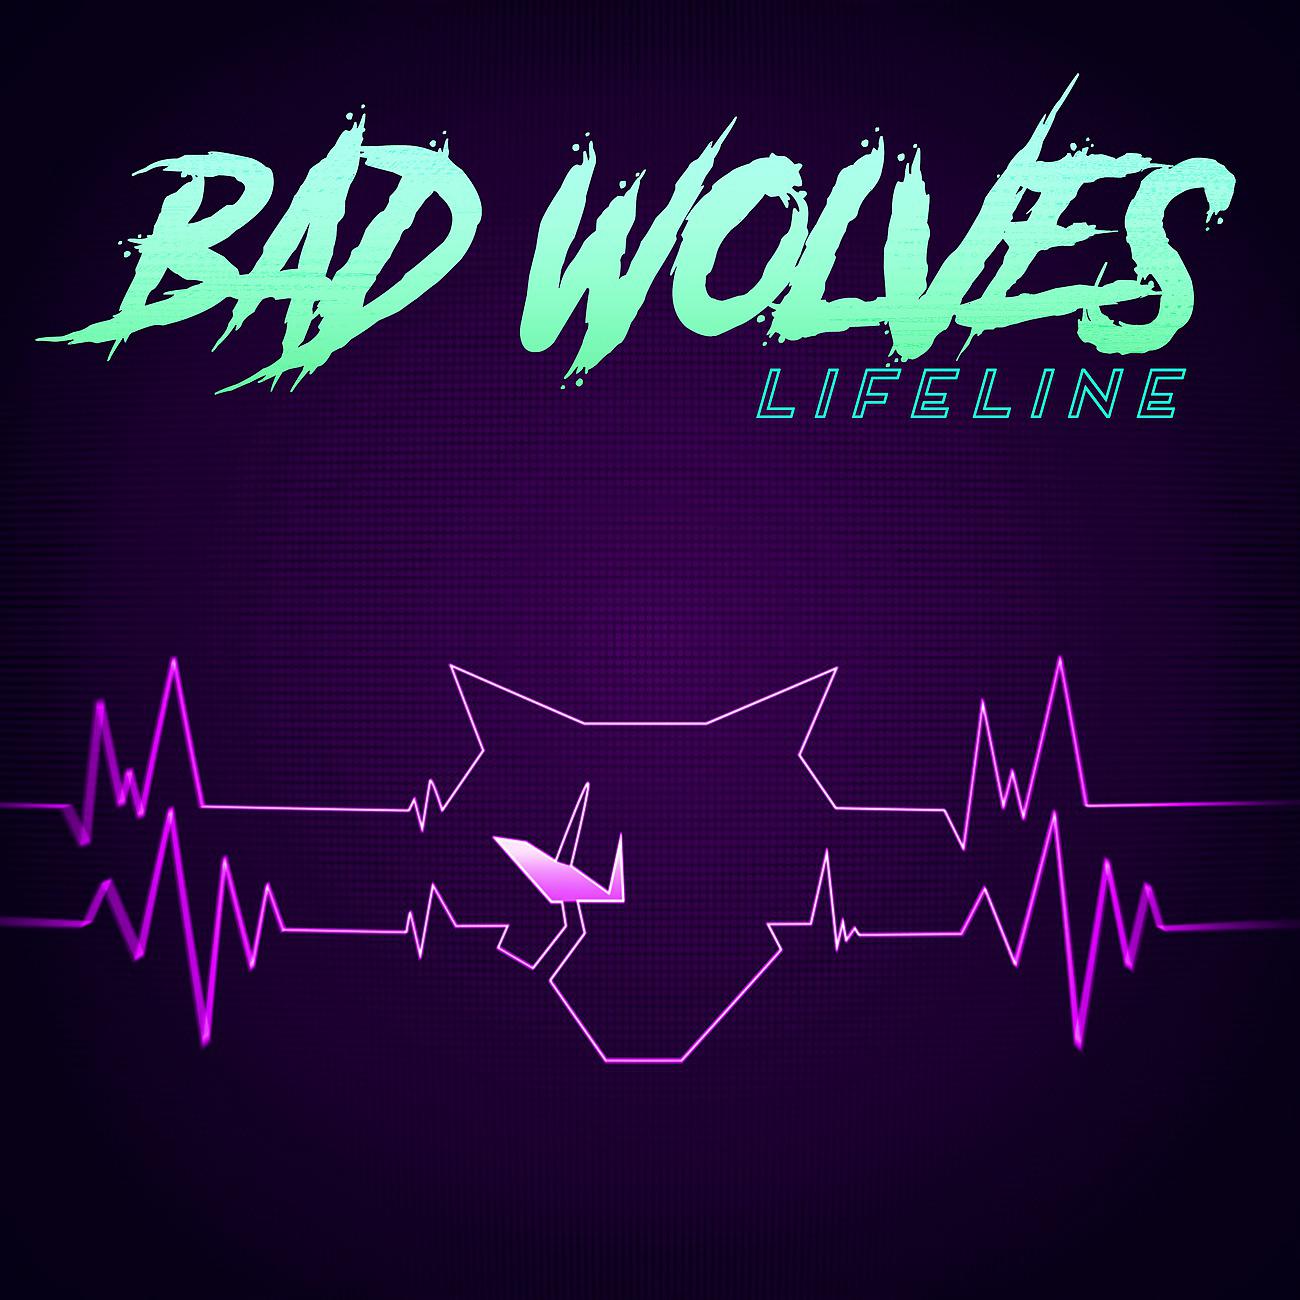 Группа Bad Wolves. Bad Wolves обложки альбомов. Bad Wolves Lifeline. Bad Wolves New album 2023. Bad wolves песни